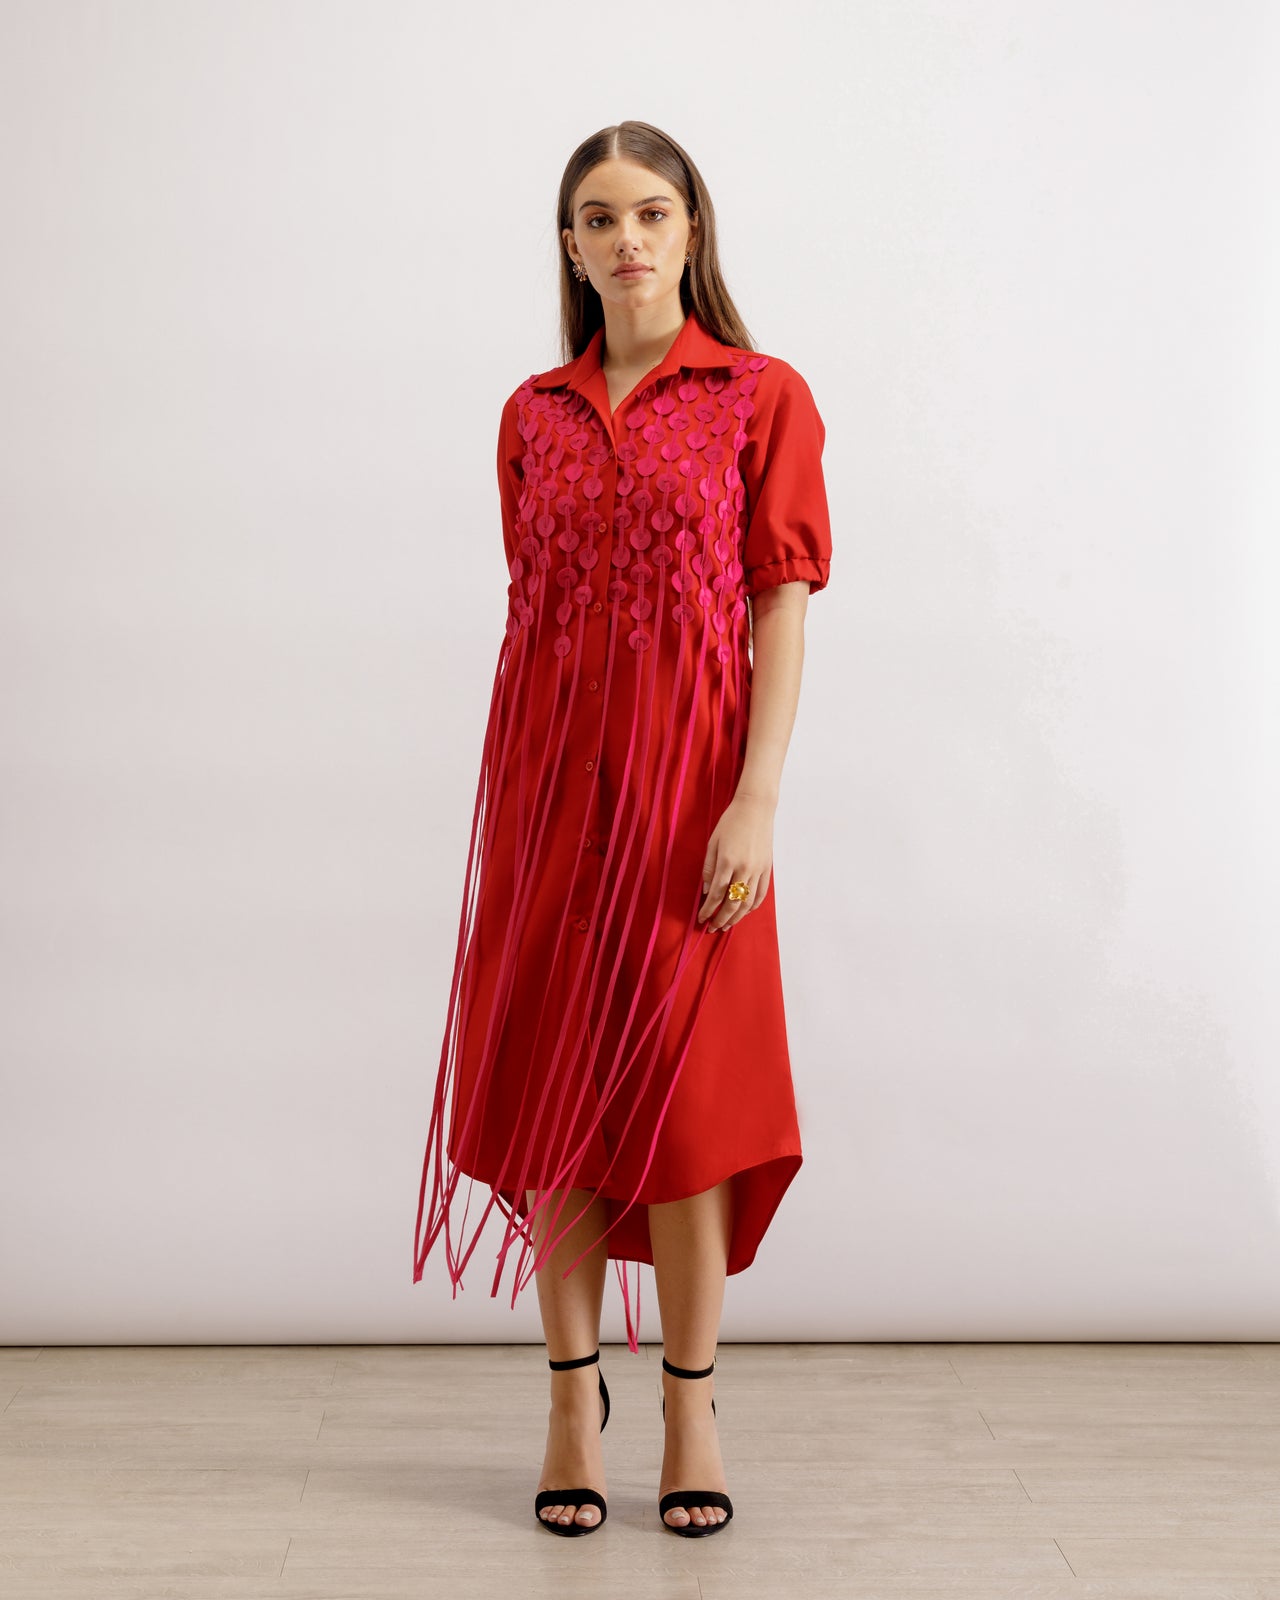 Red Fringe Shirt Dress | Iris Fringe Shirt Dress - Red | PAIVE